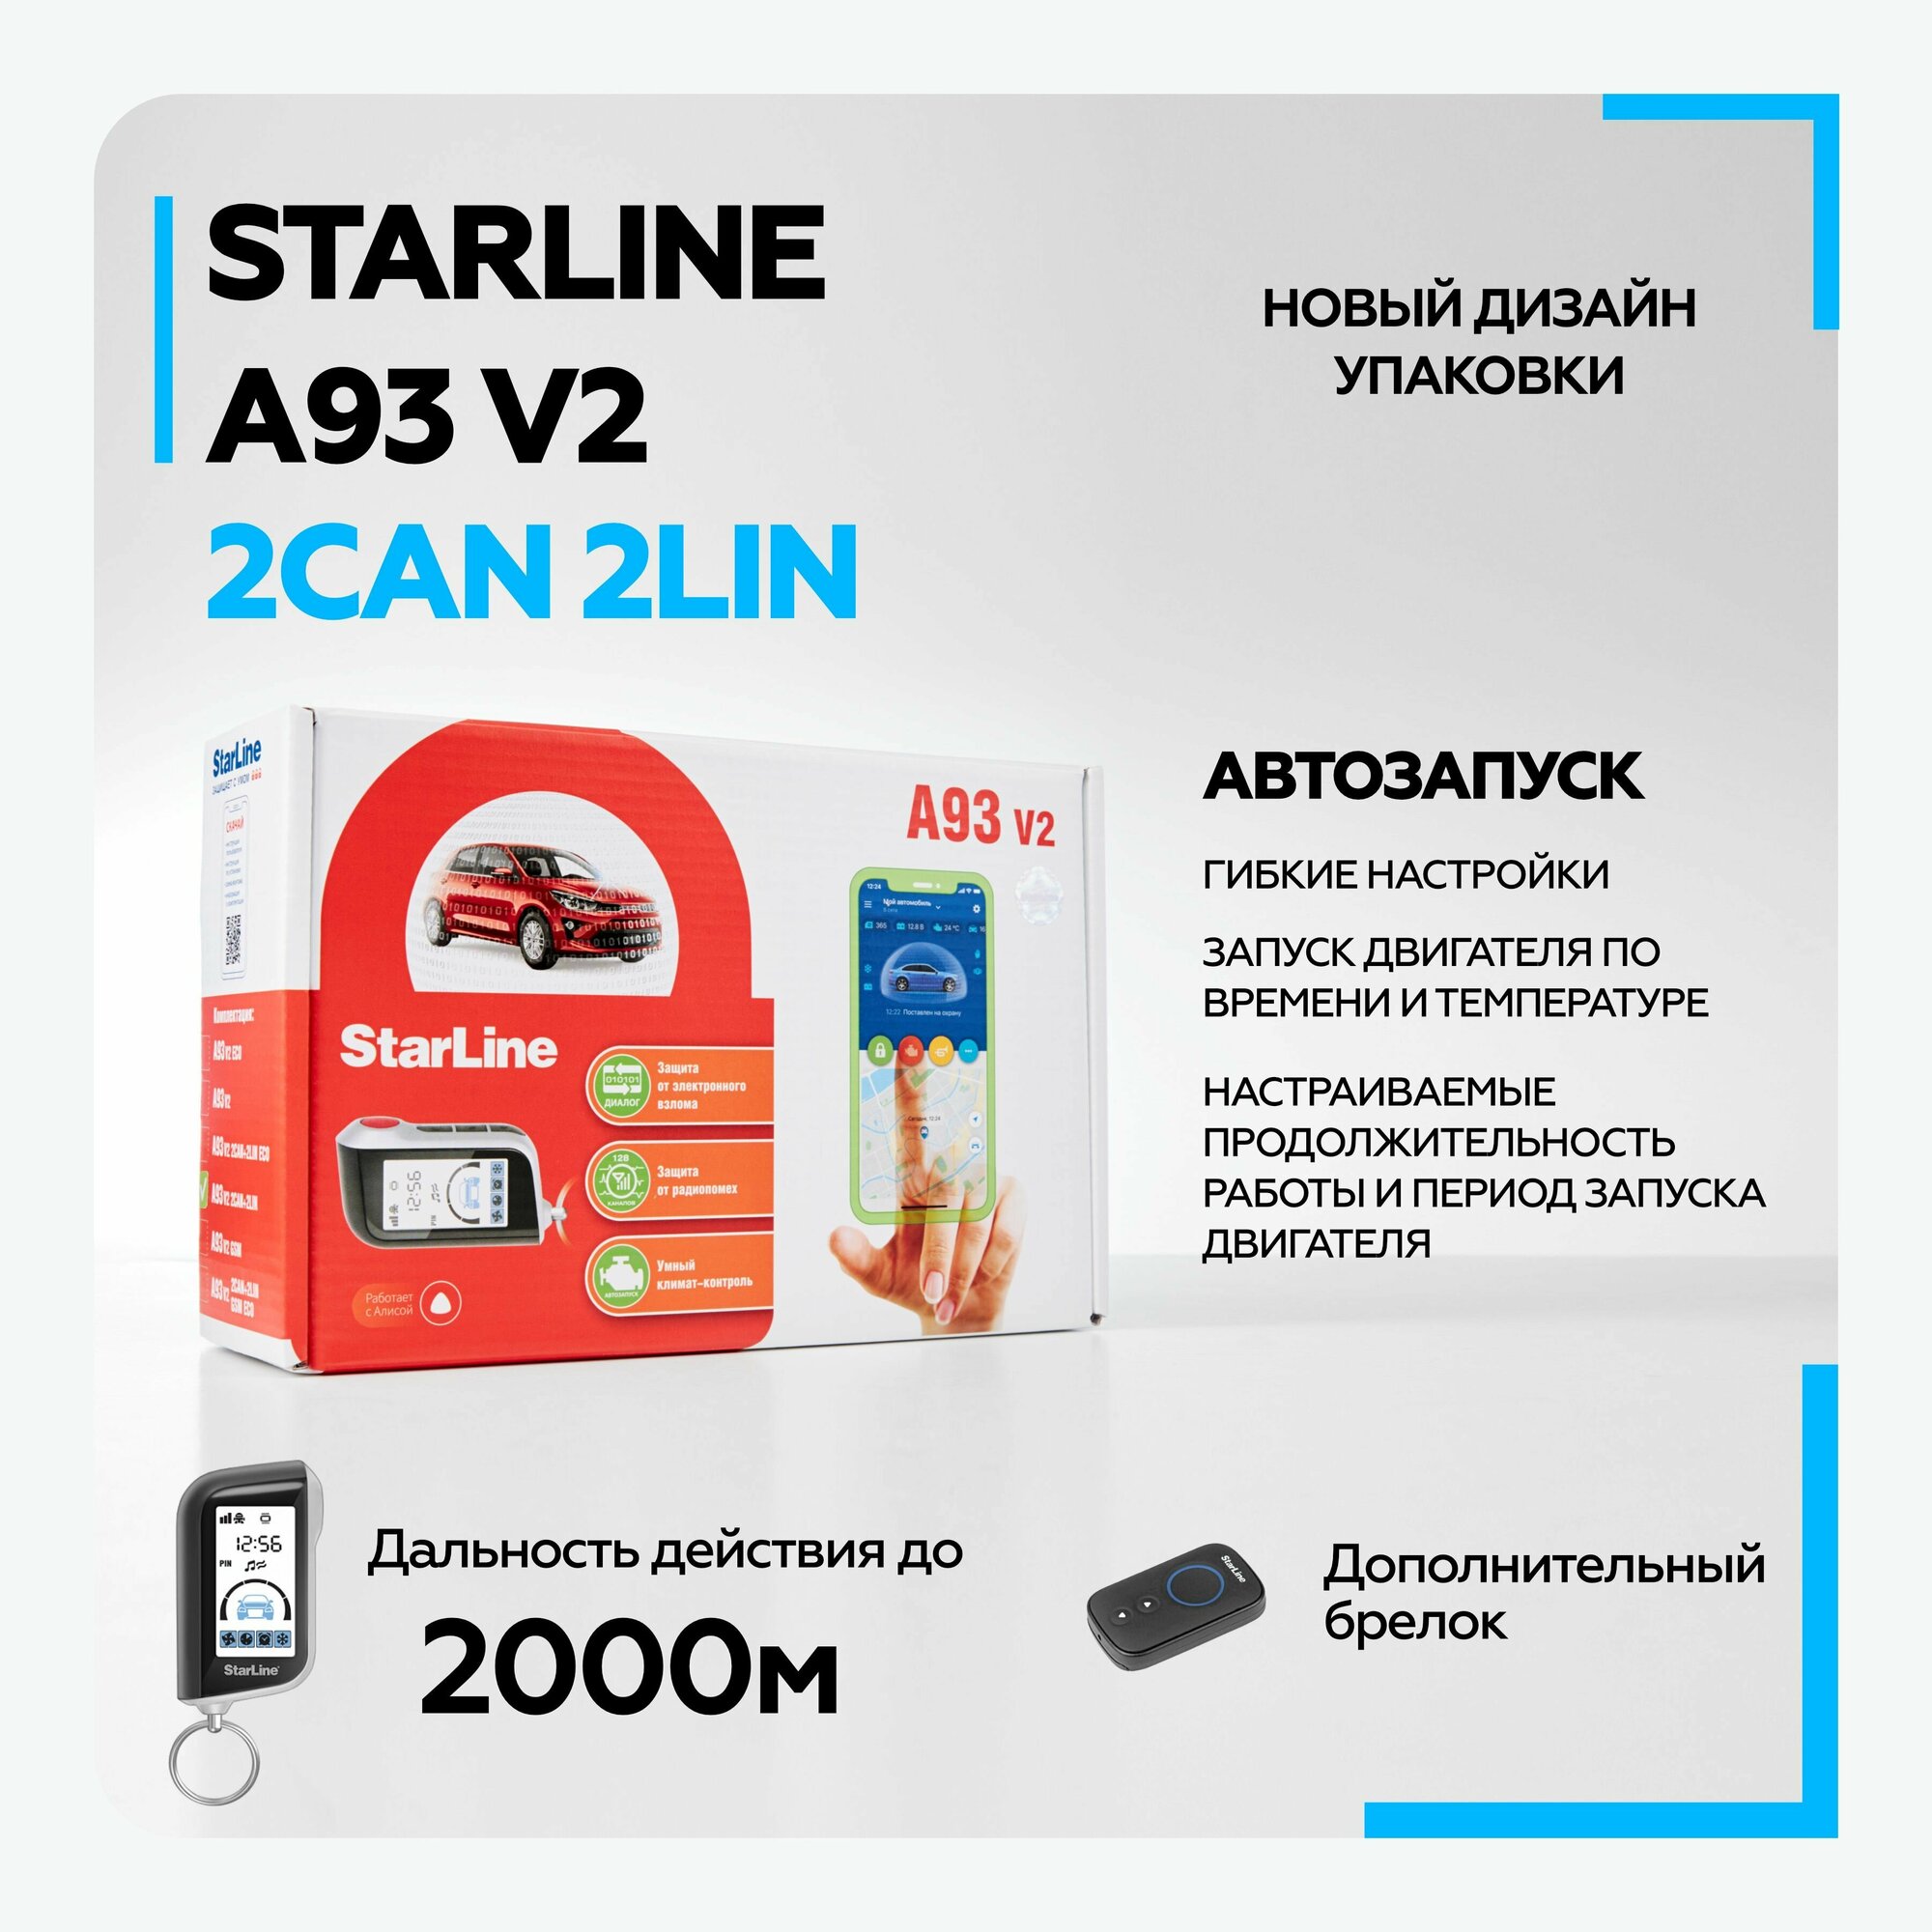 Автосигнализация с автозапуском StarLine A93 v2 2CAN+2LIN с обратной связью, автозапуском, дополнительным брелком